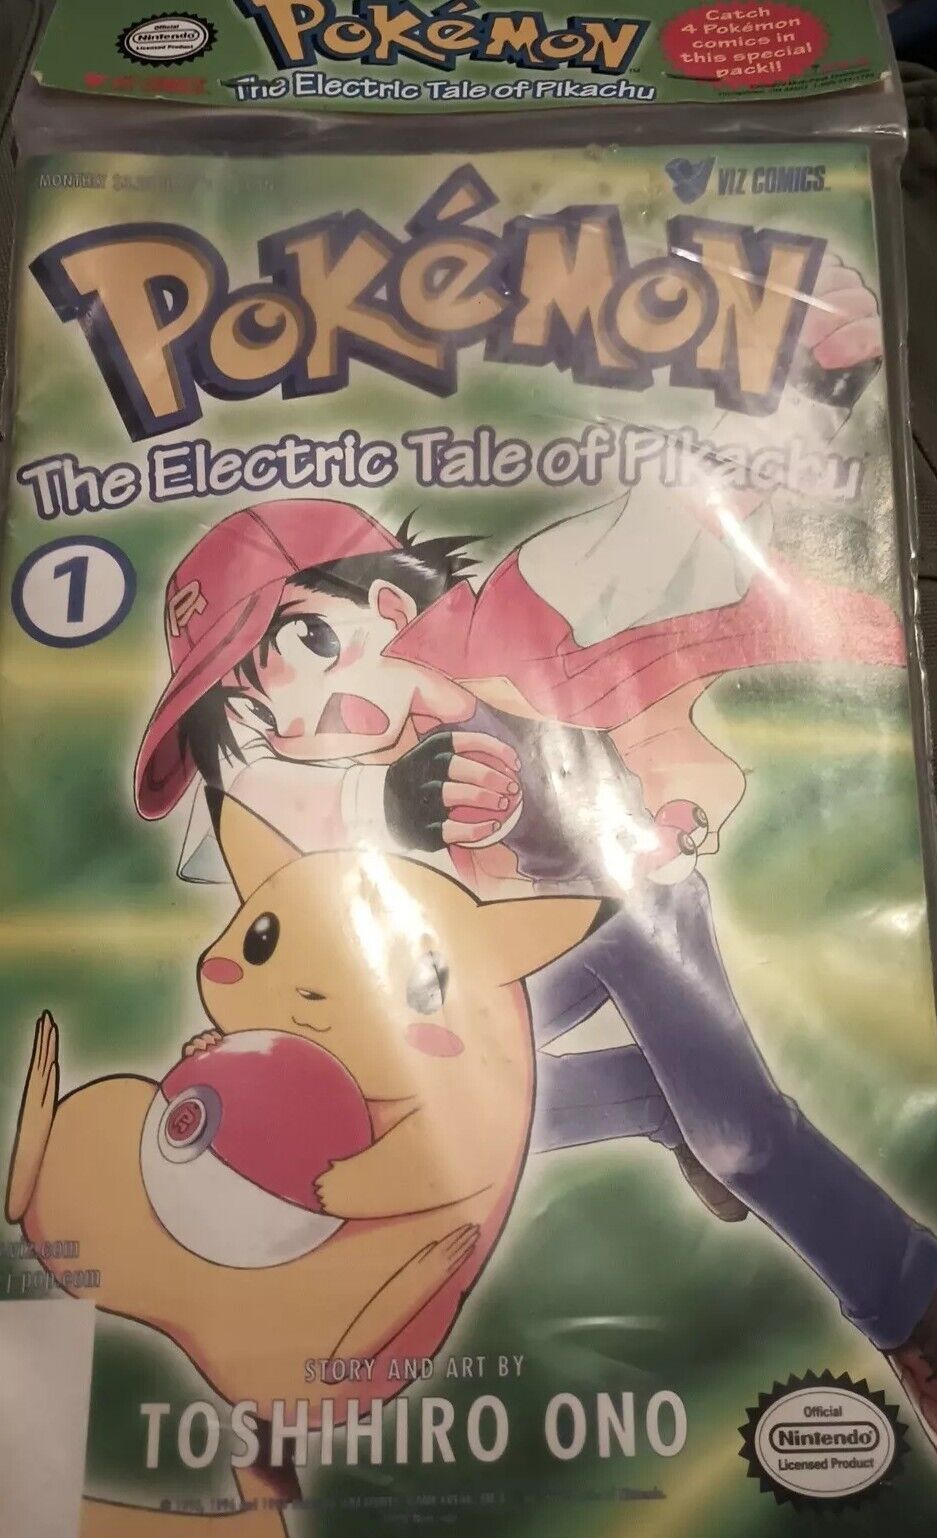 Pokemon: The Electric Tale of Pikachu #1,2,3, & 4 Captiva, Inc. Multi-Pack SET